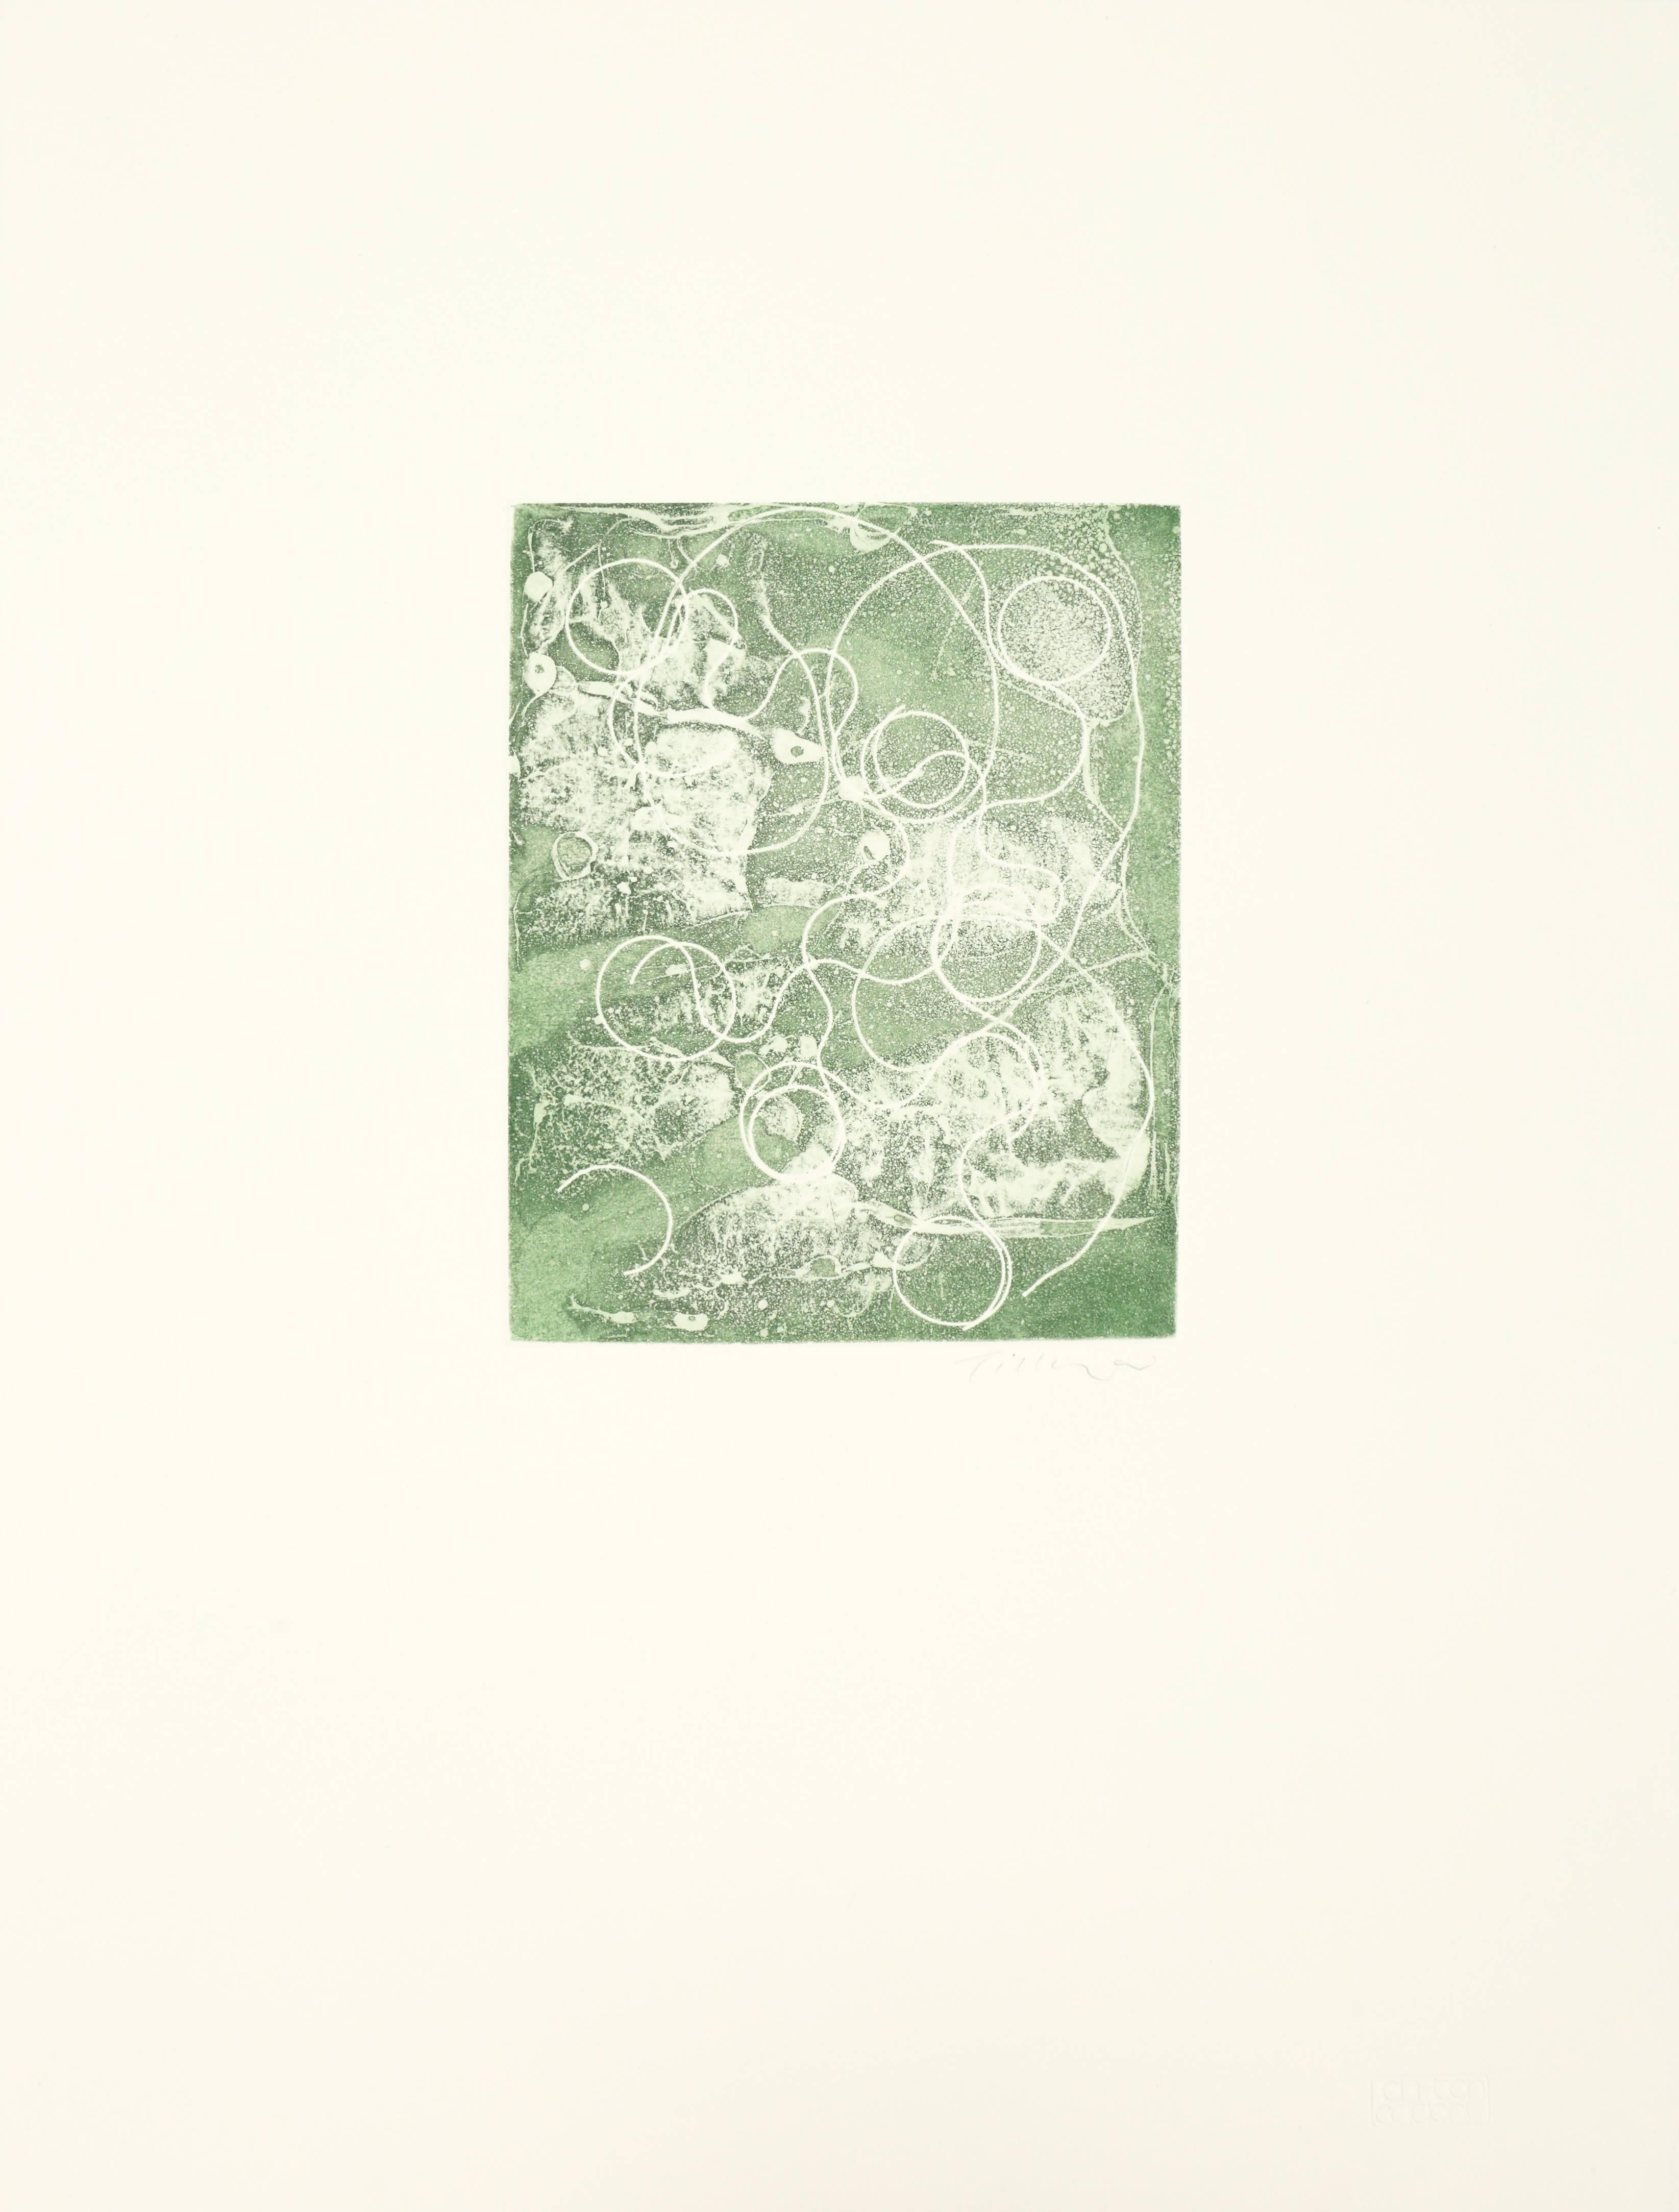 Abstract Print William Tillyer - Extract de fleur de laurier